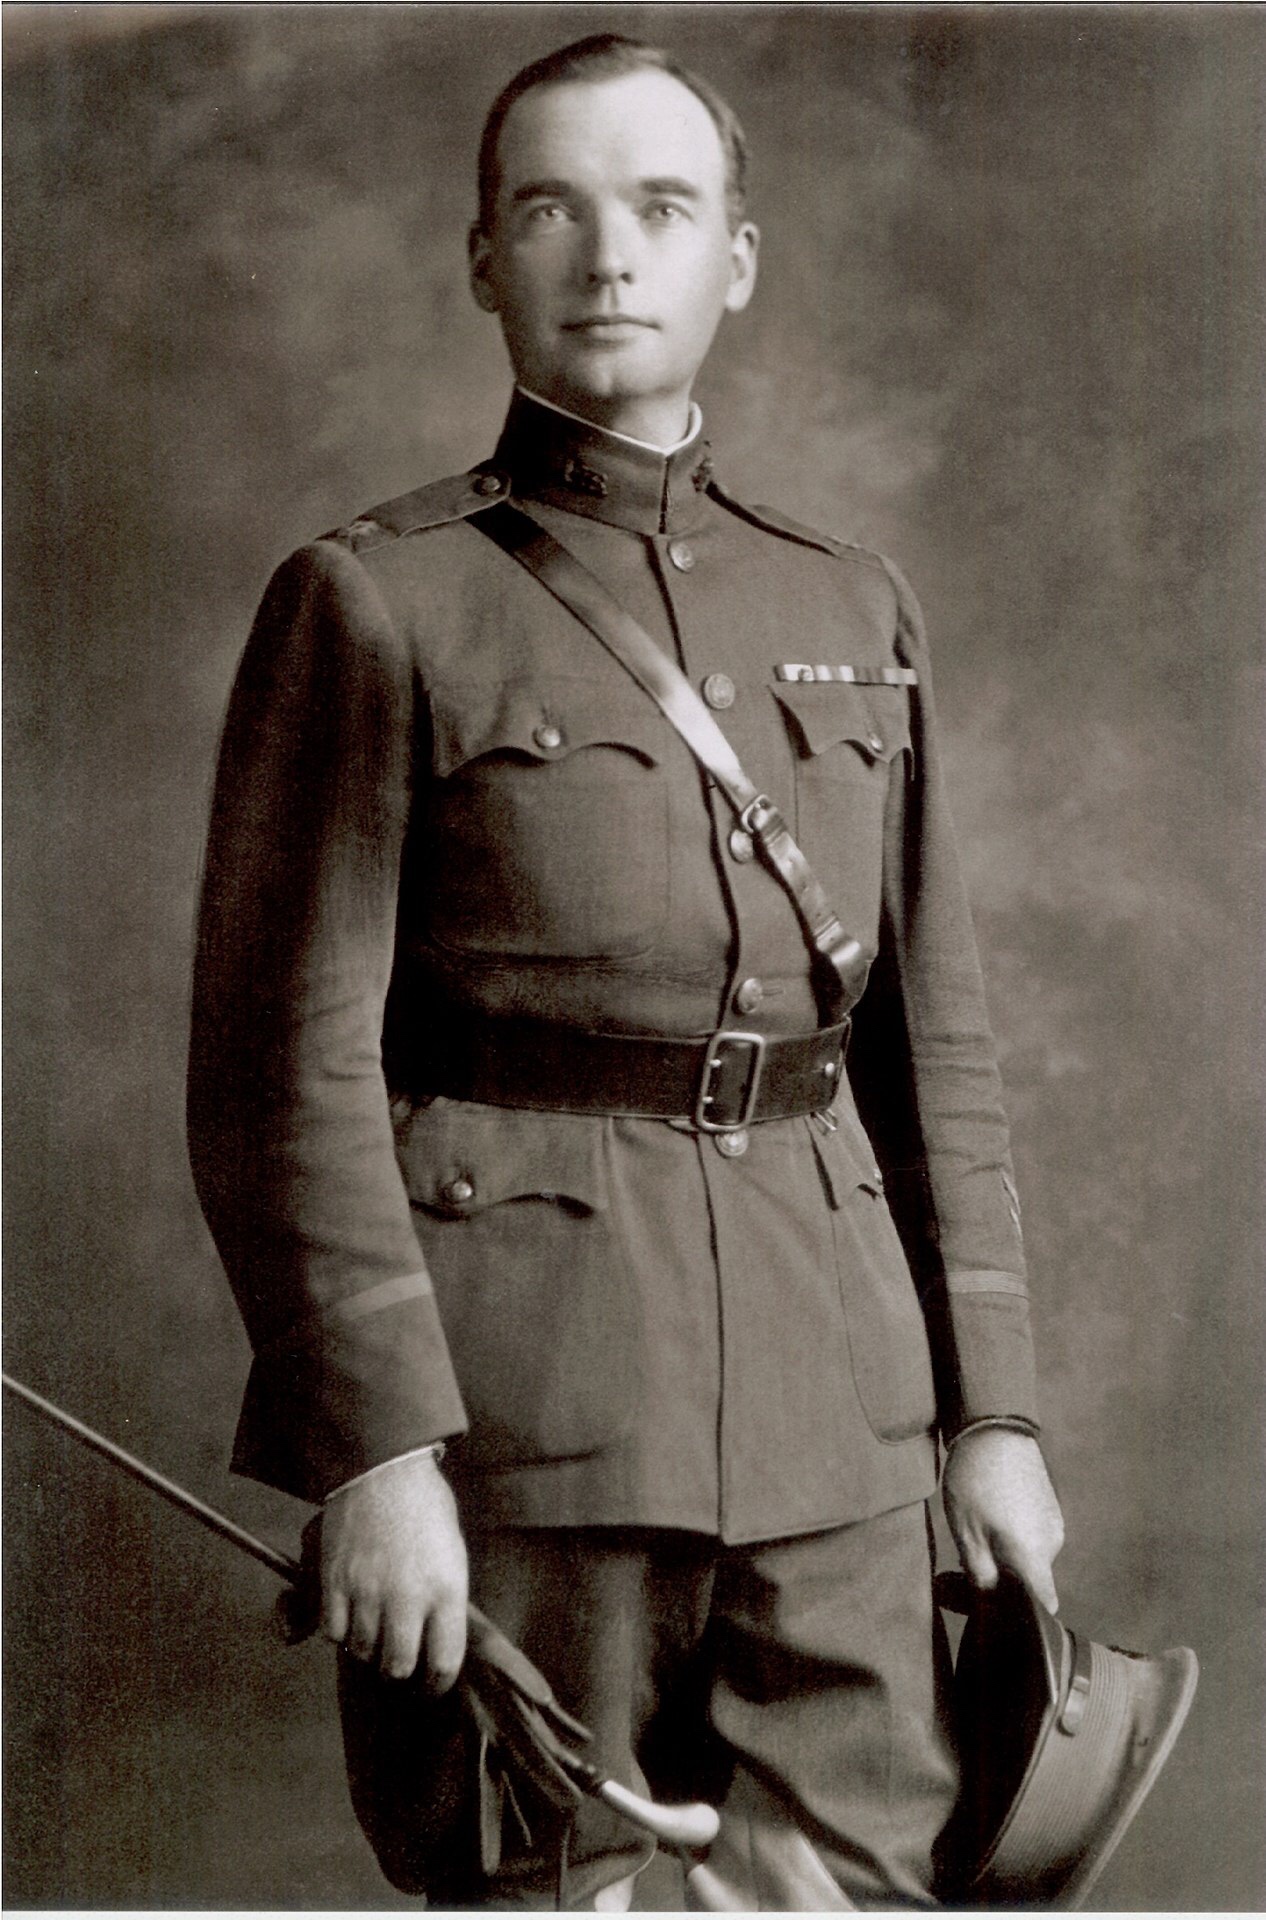 Major Malcolm Wheeler-Nicholson in his US Army days